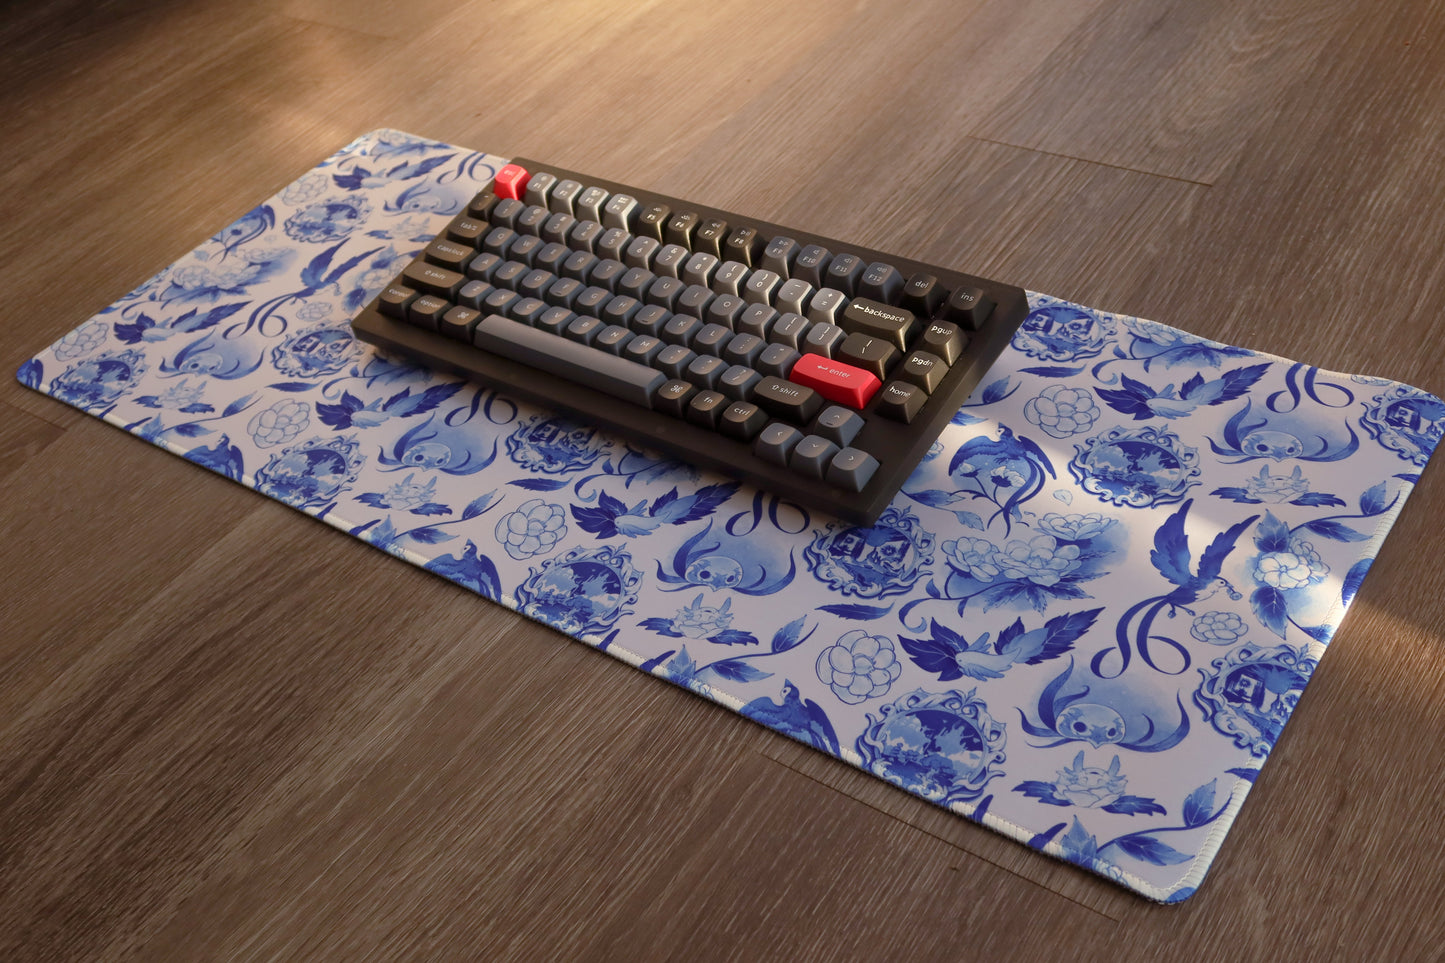 FFXIV Endwalker Desk Mat/Large Mousepad by [akitamii x c-dra]